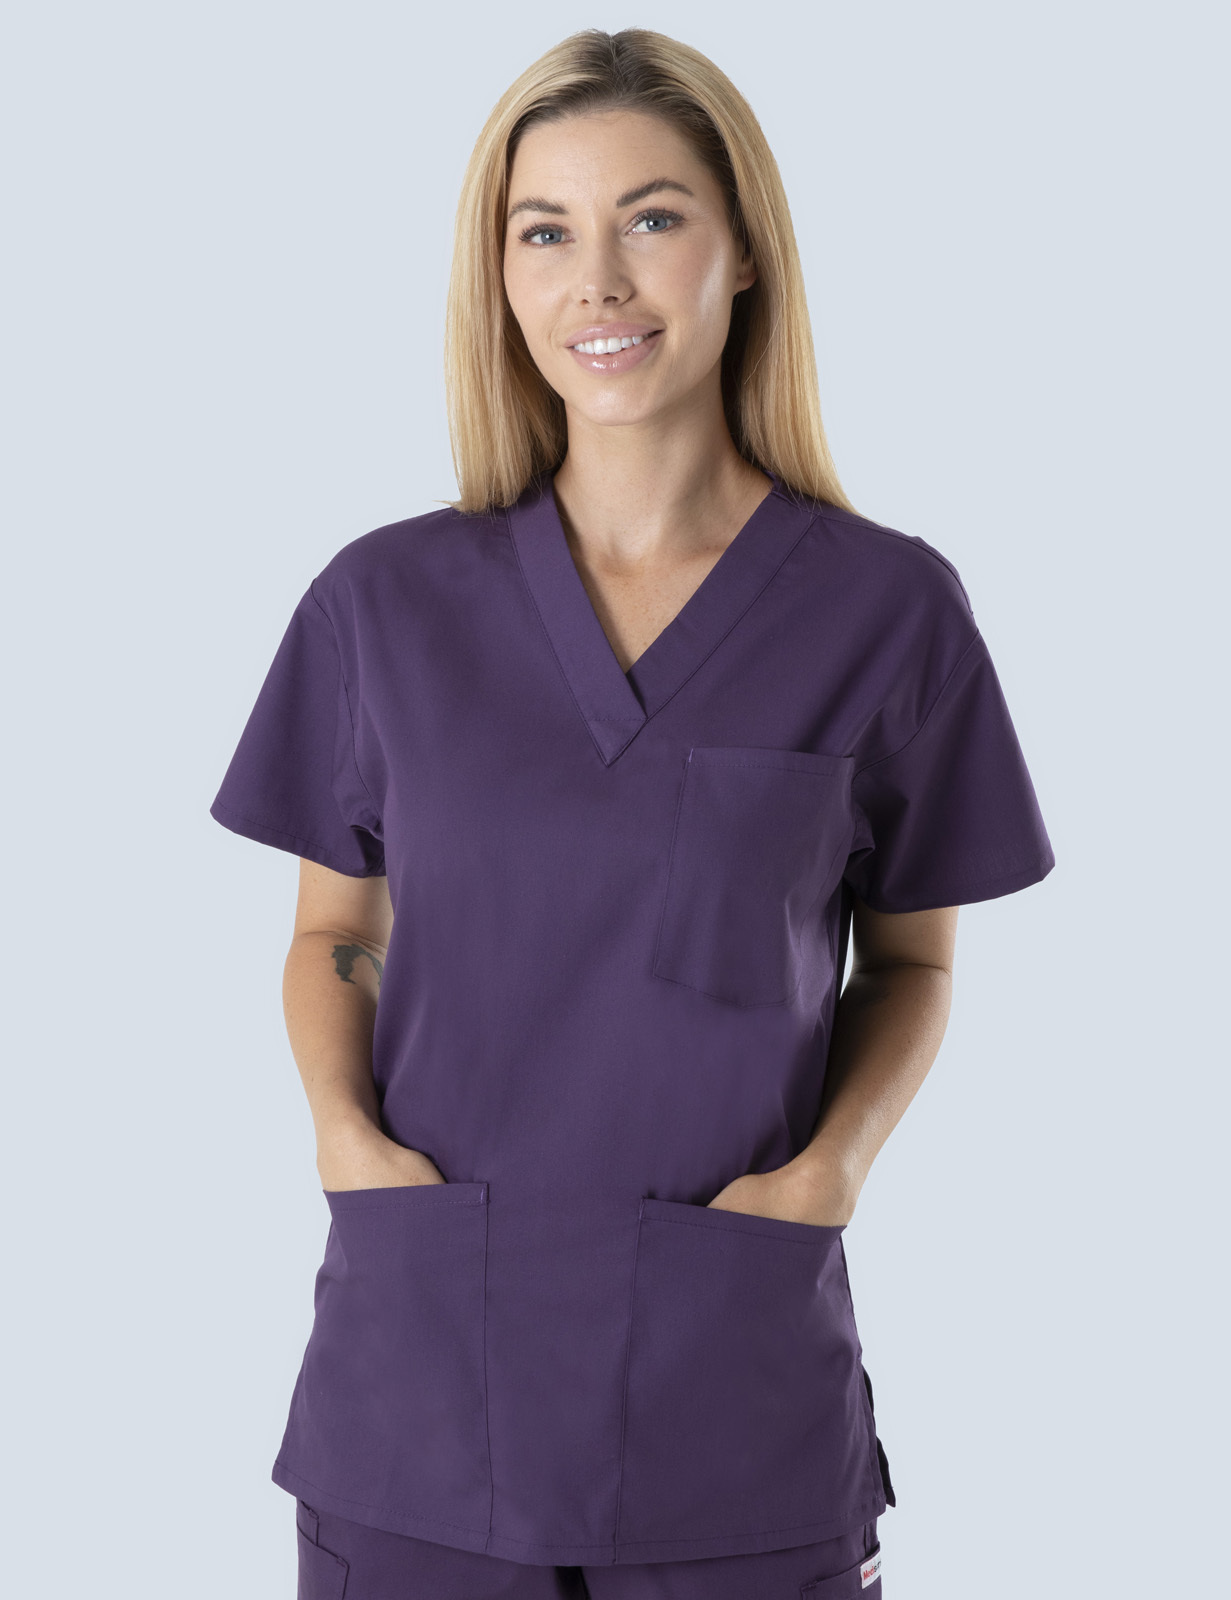 Tweed Hospital Pharmacy - PHARMACY TECHNICIAN - Aubergine Women's 4 Pocket Scrub Top